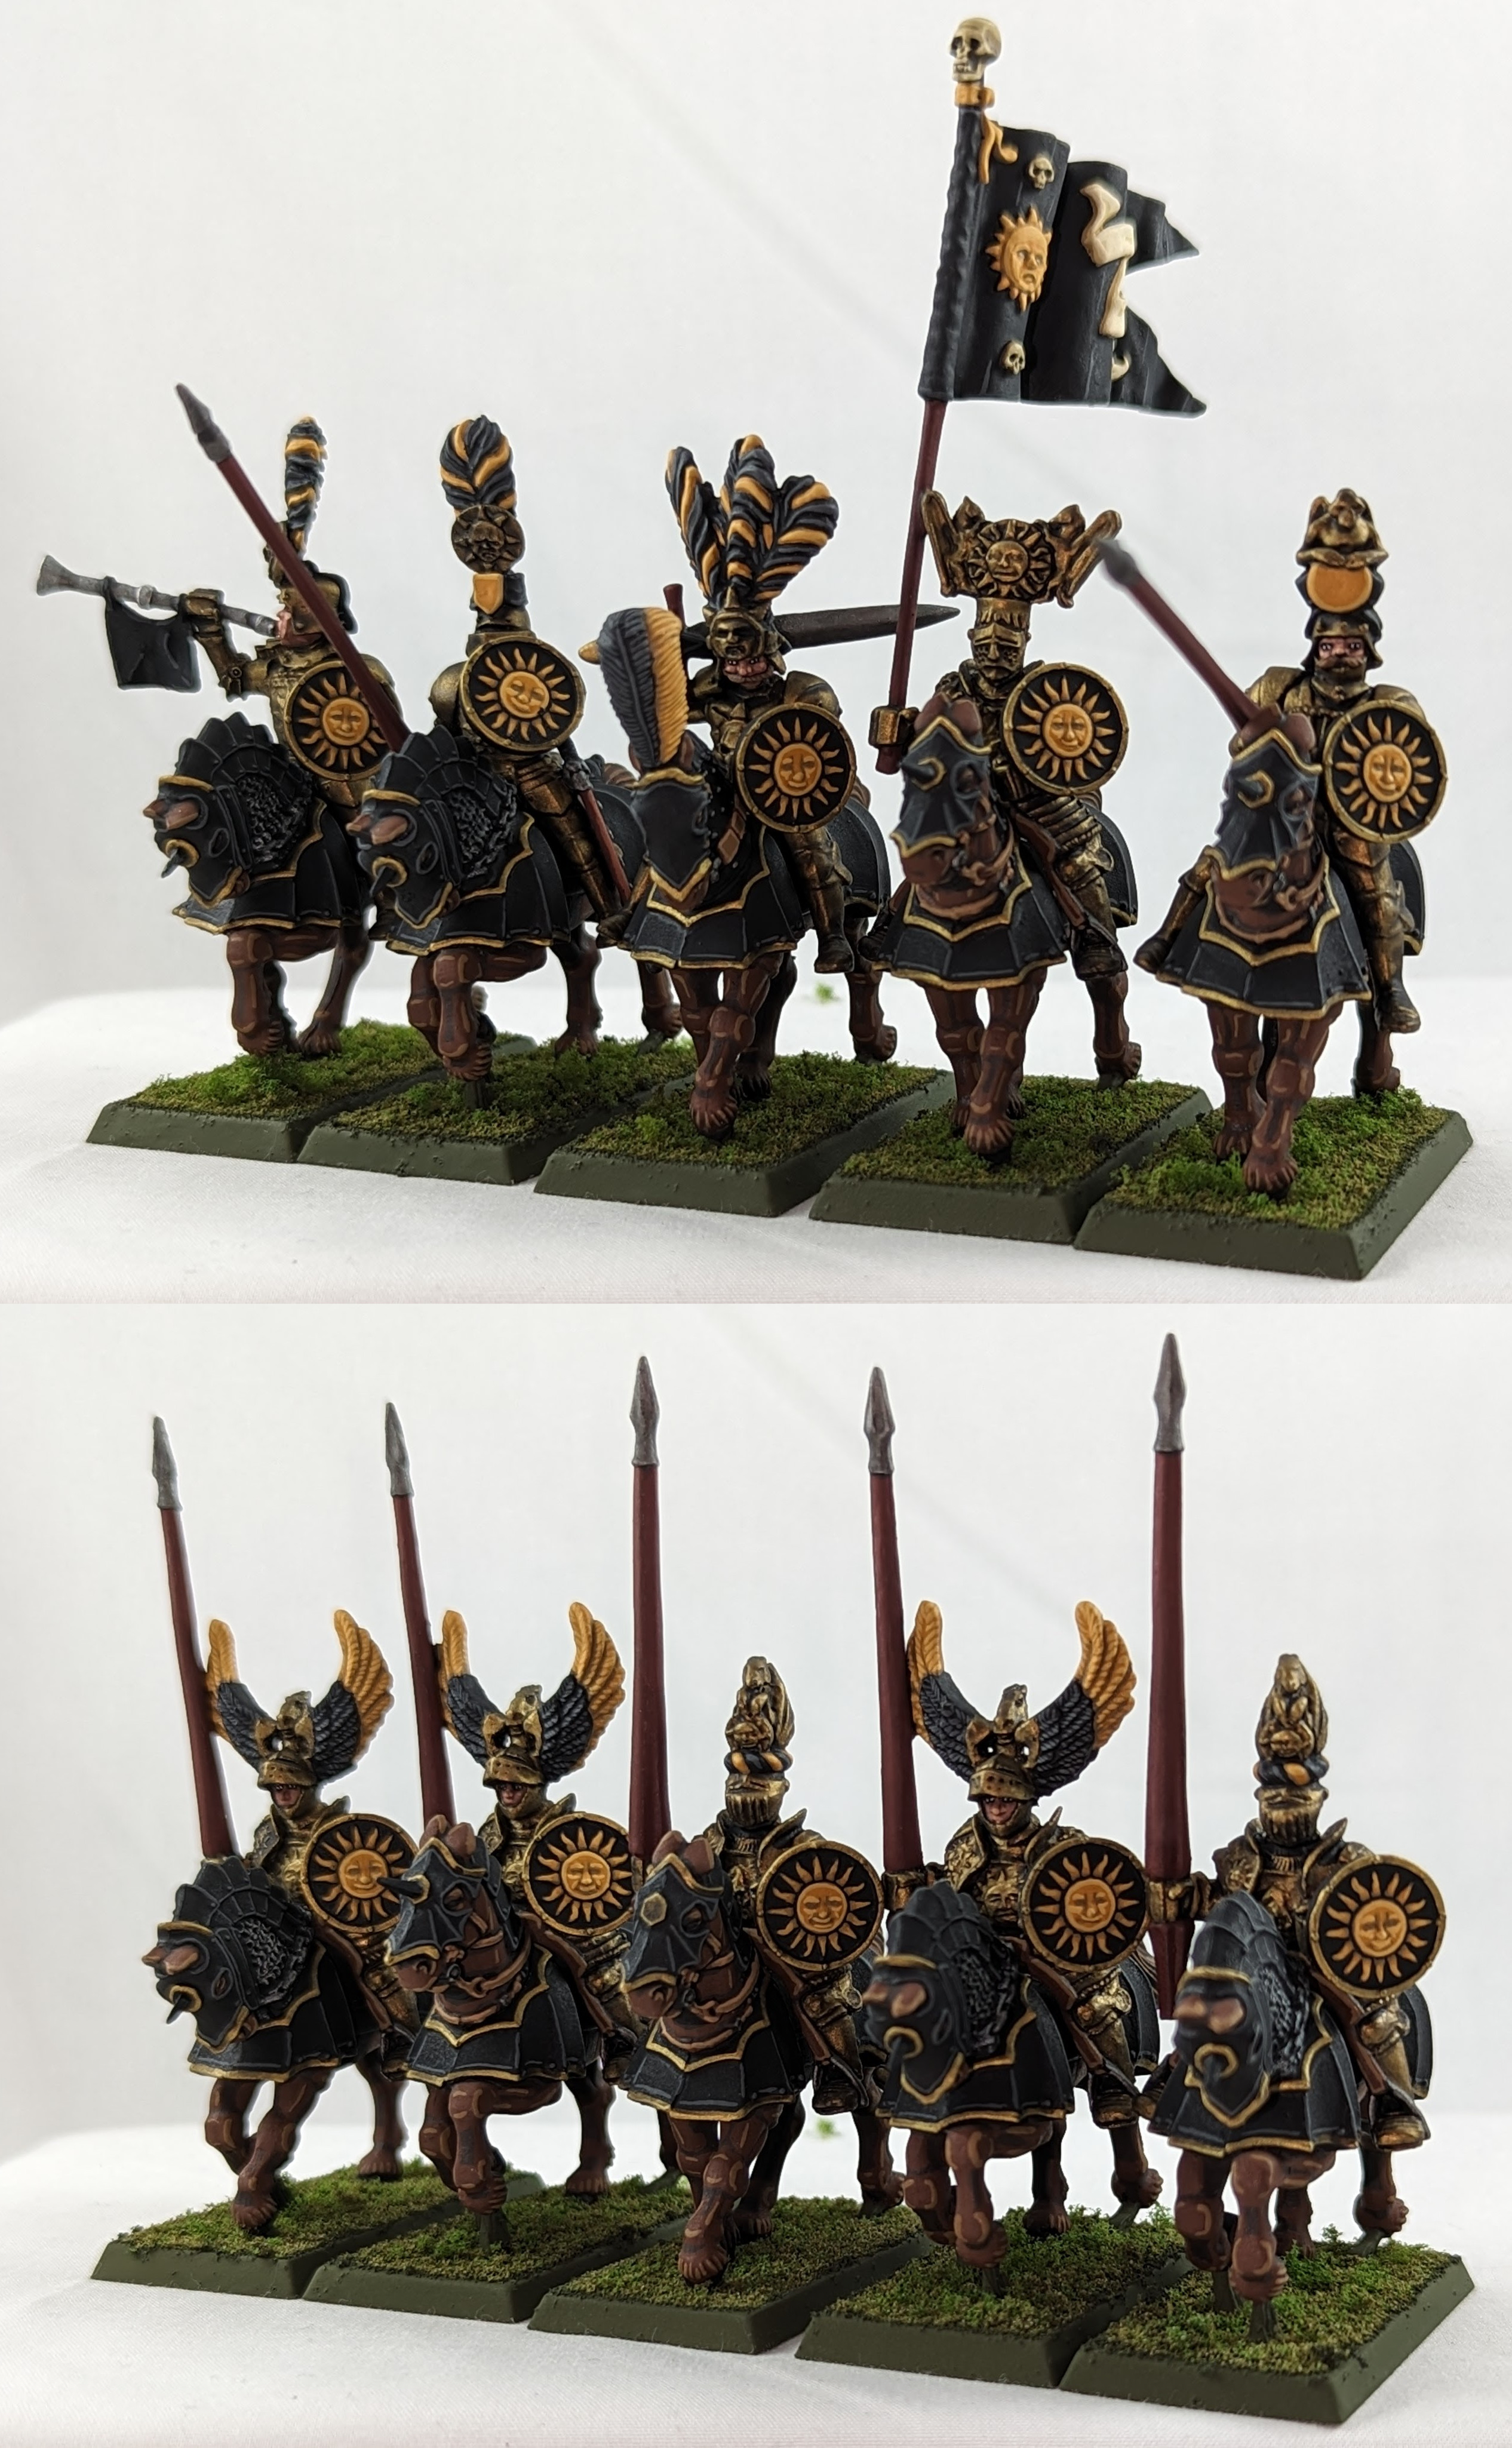 Knights of the Blazing Sun